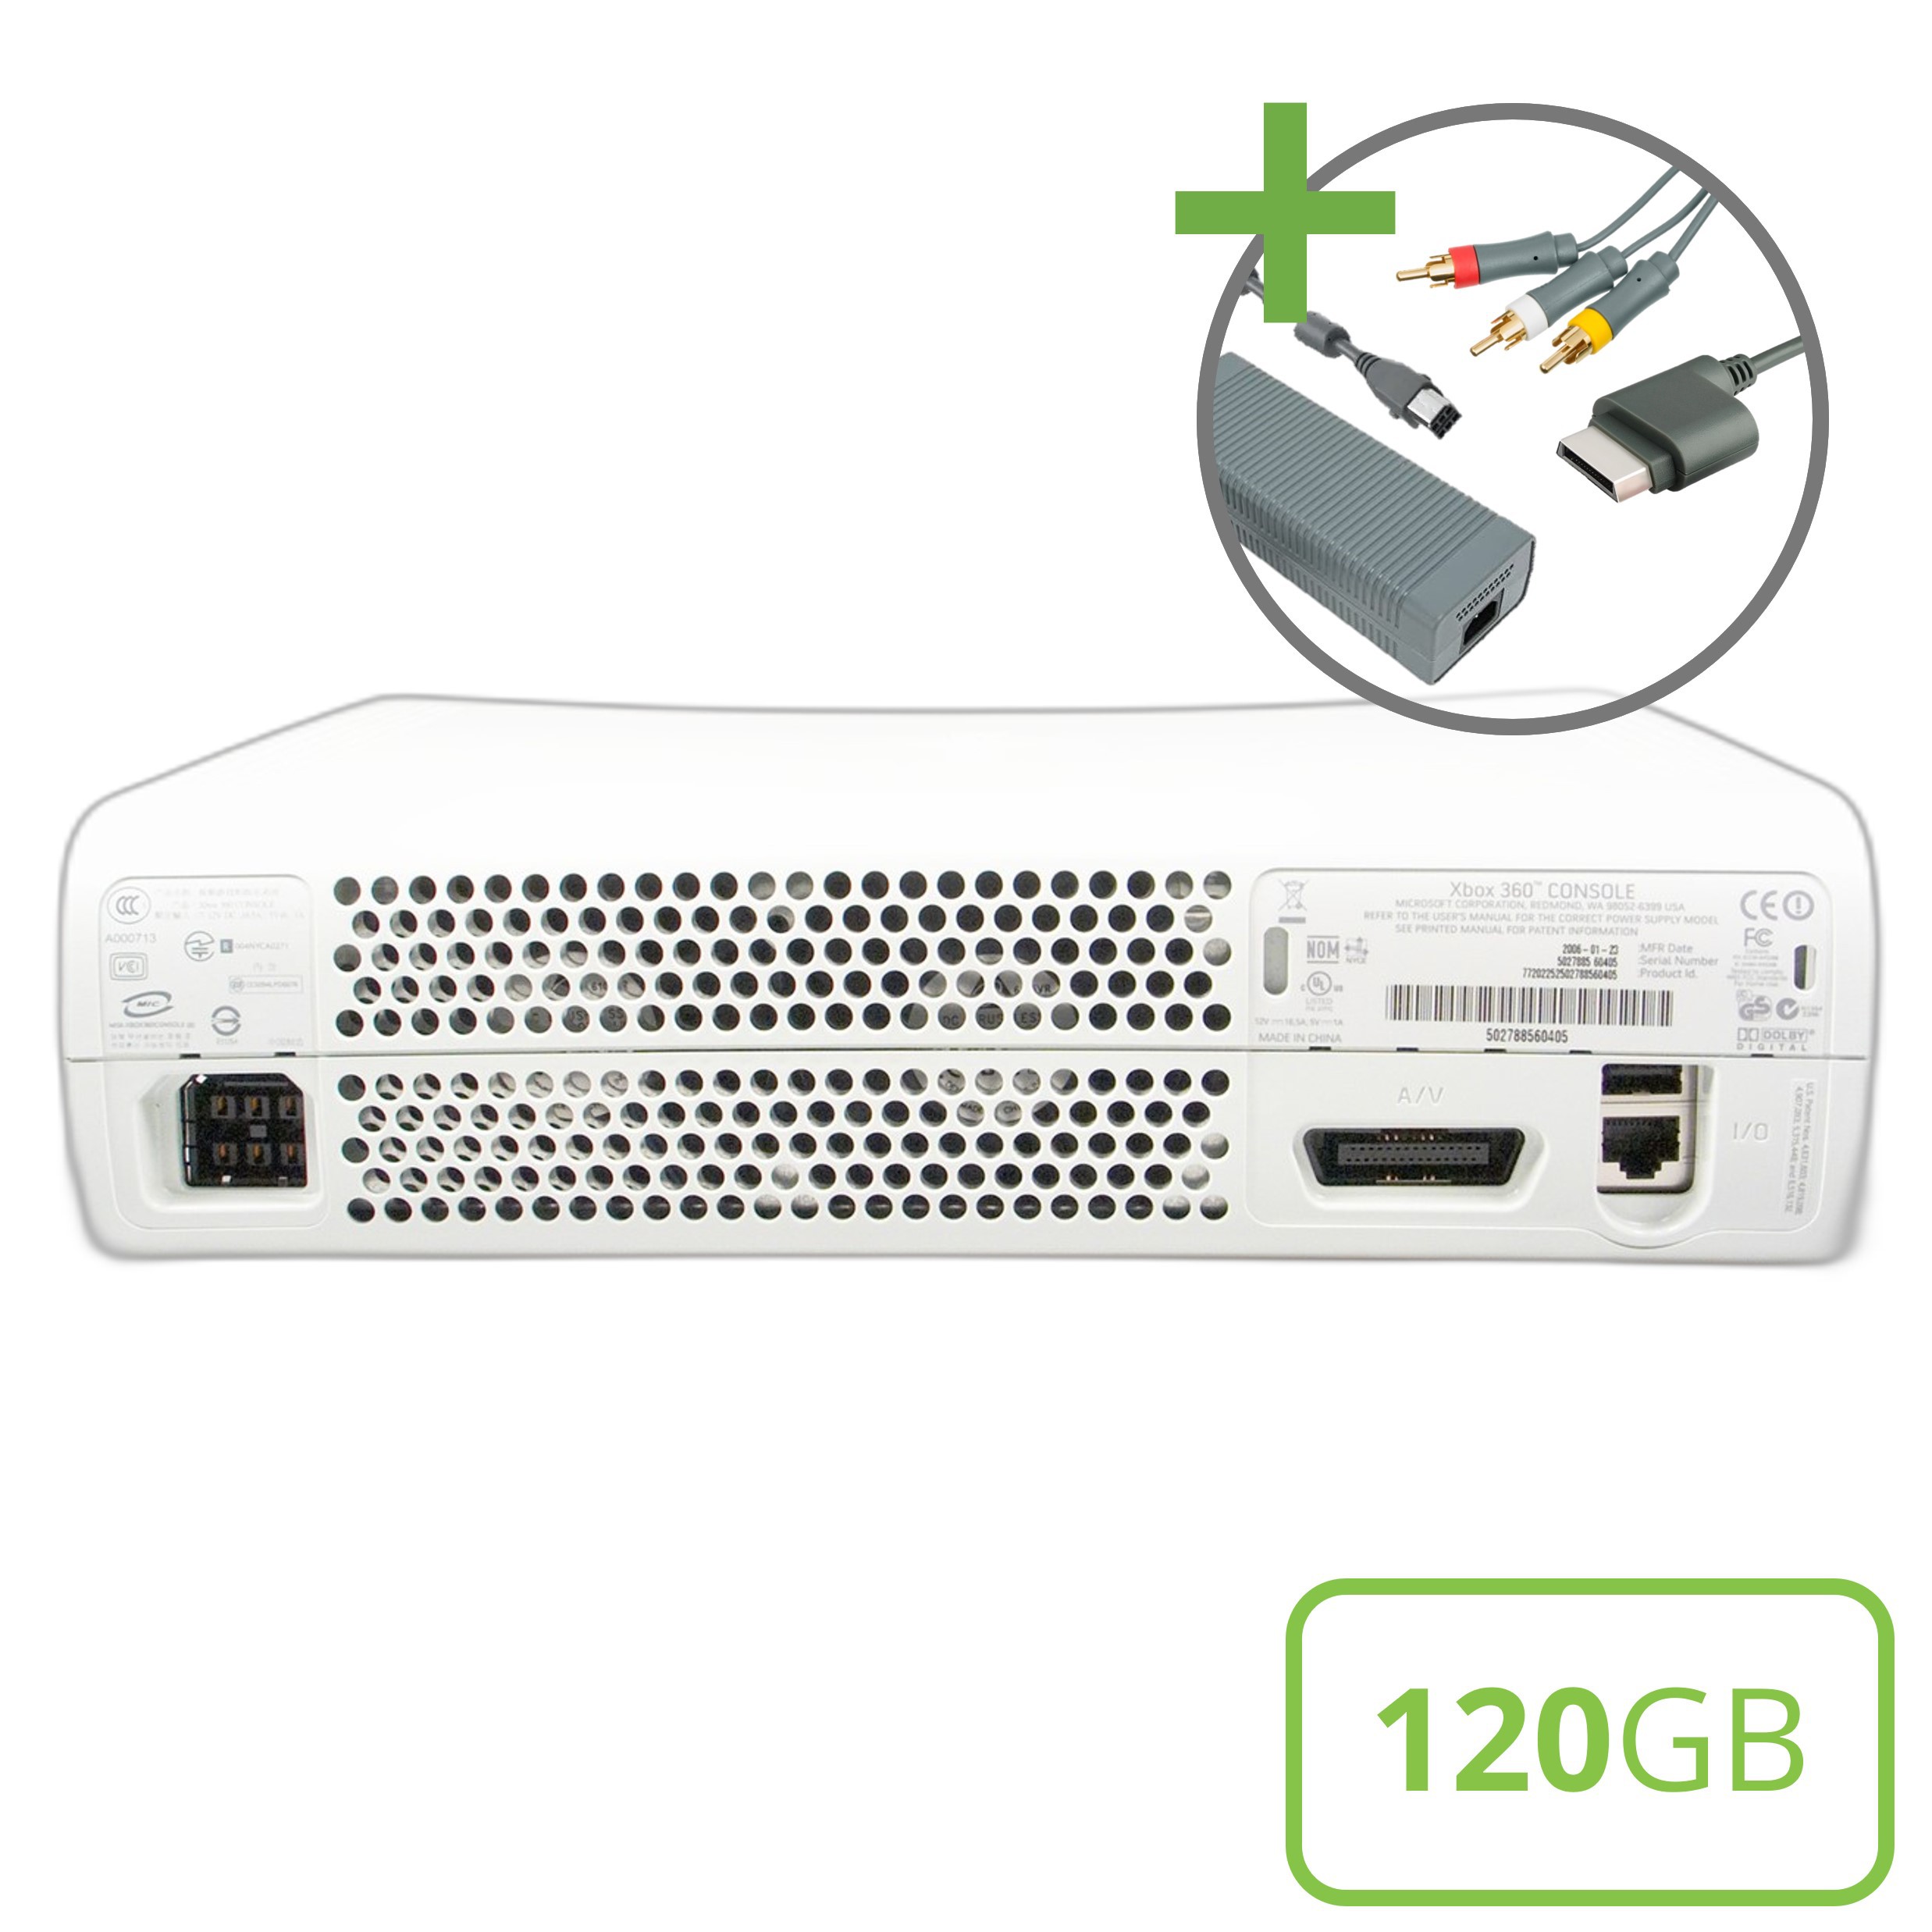 Microsoft Xbox 360 Premium Console (AV) - 120GB - Xbox 360 Hardware - 3